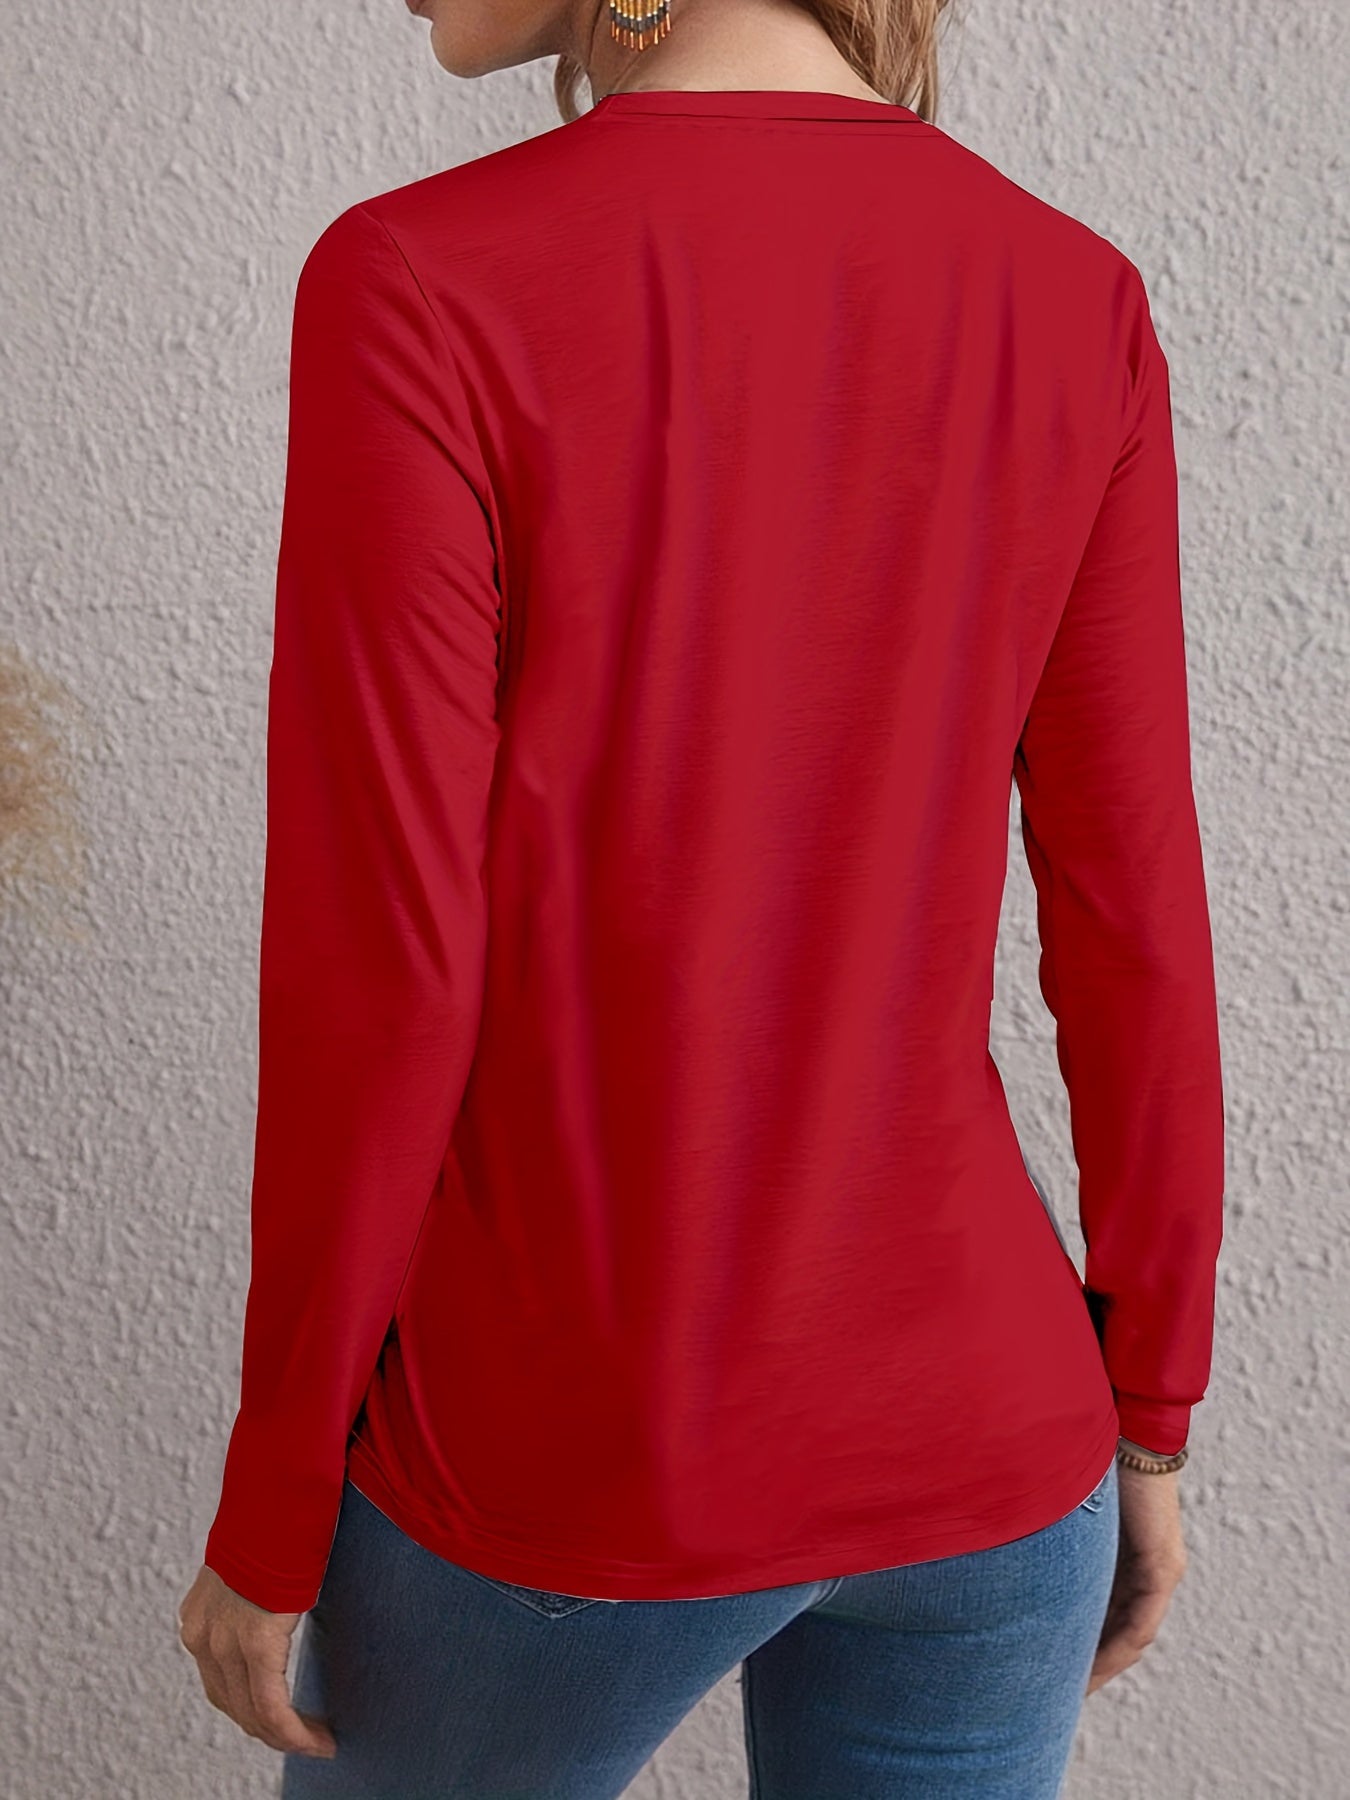 Women Plus Size Christmas Print Long Sleeve Round Neck  T-shirt YT1202 Ada Fashion